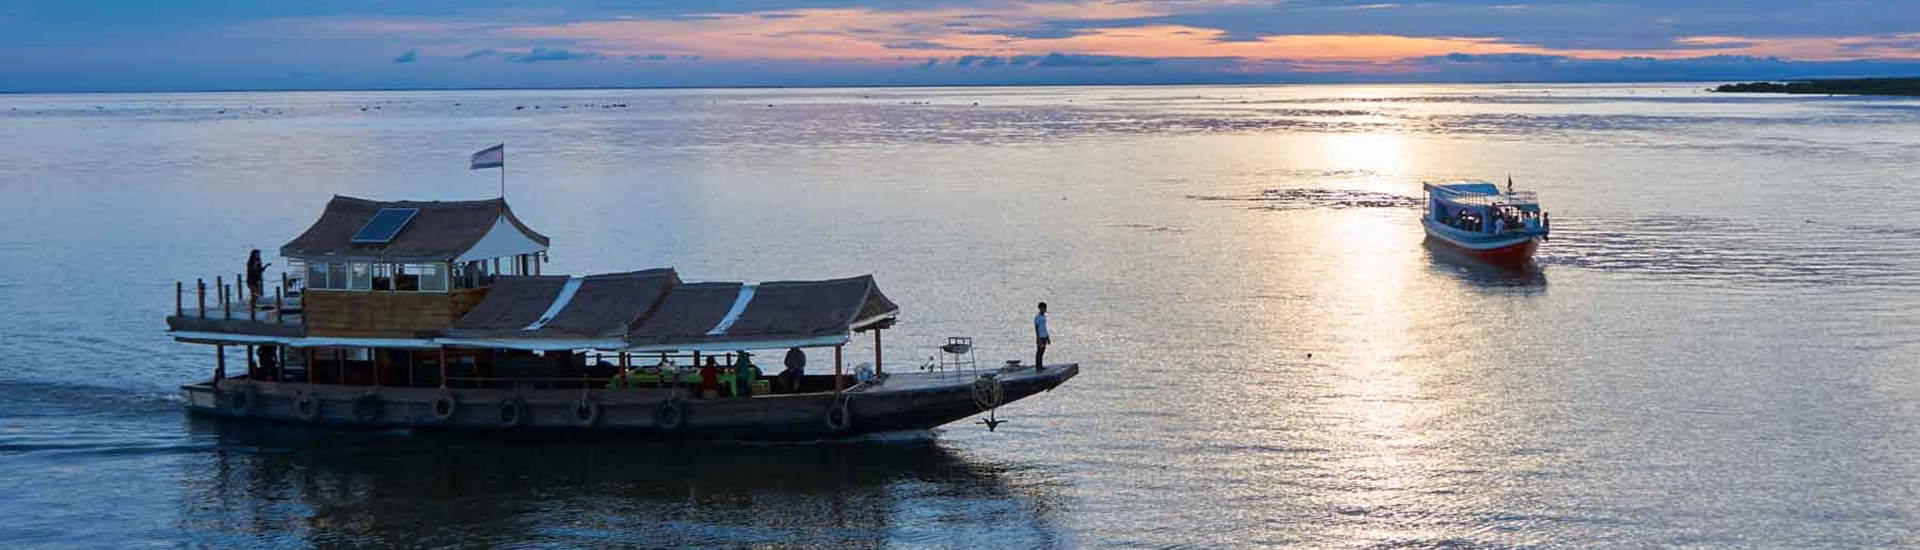 Tonle Nap Lake Tour